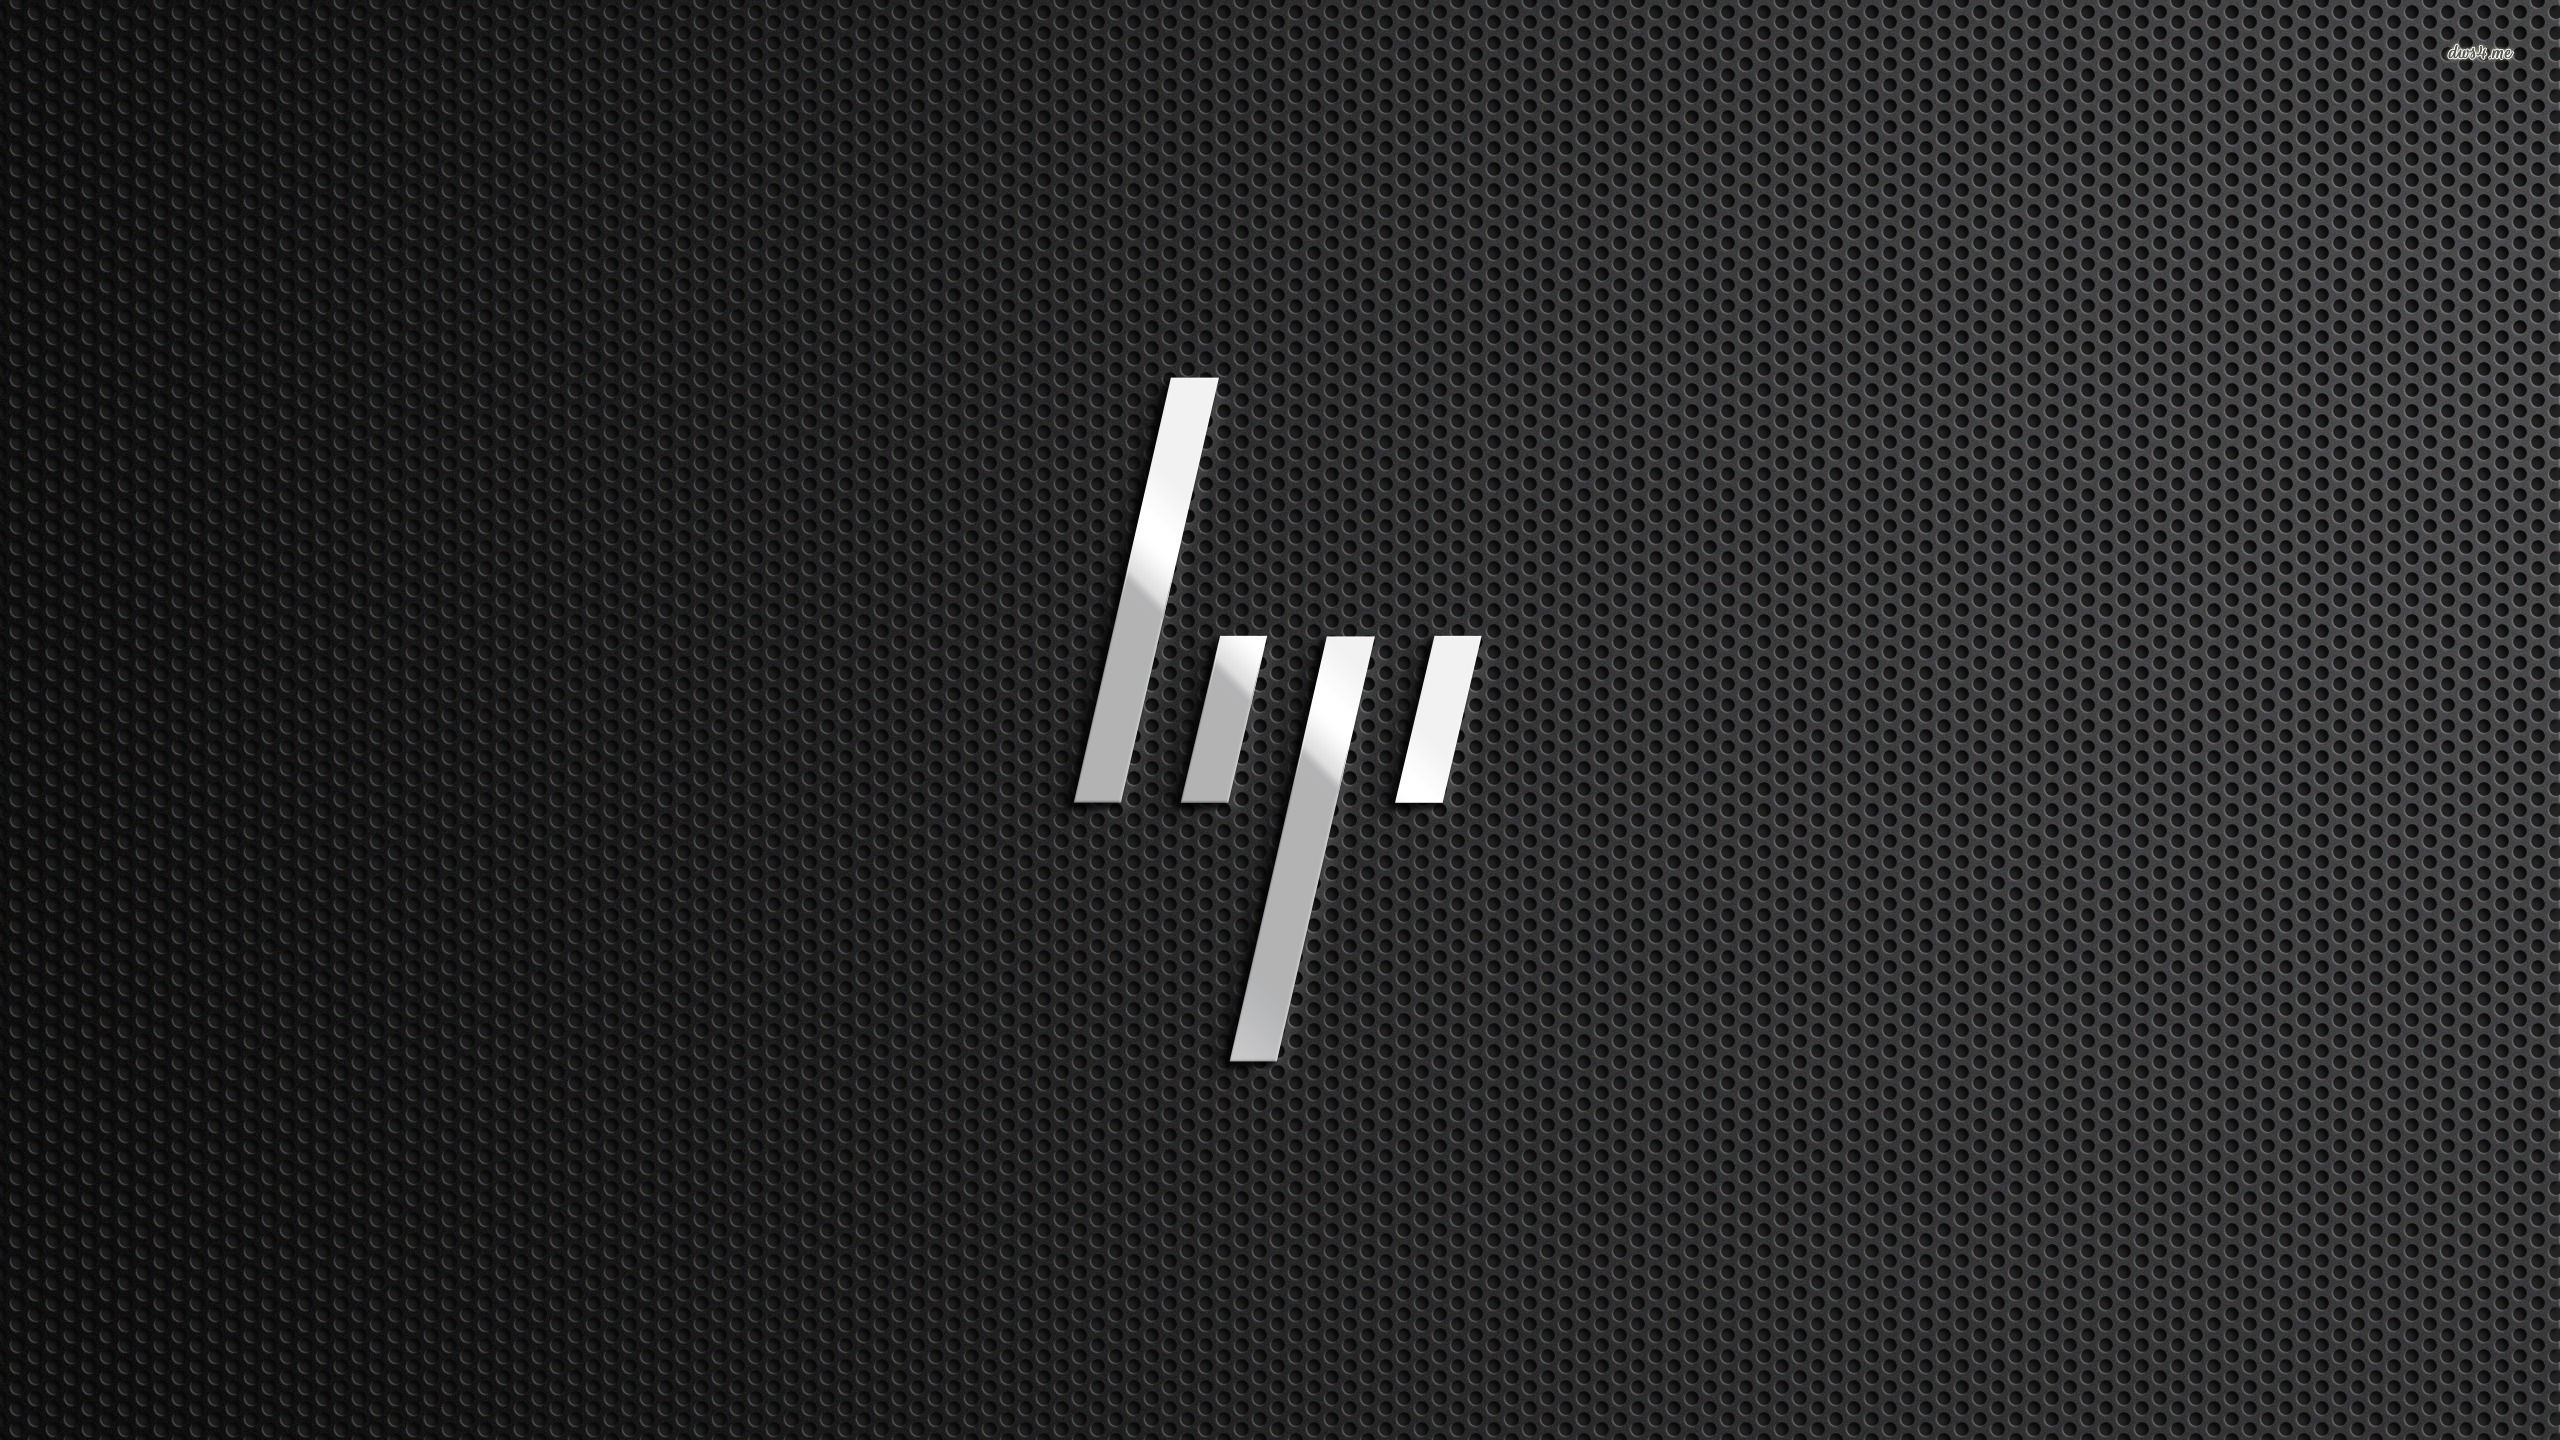 Metallic HP logo on black dots wallpaper - Computer wallpapers ...